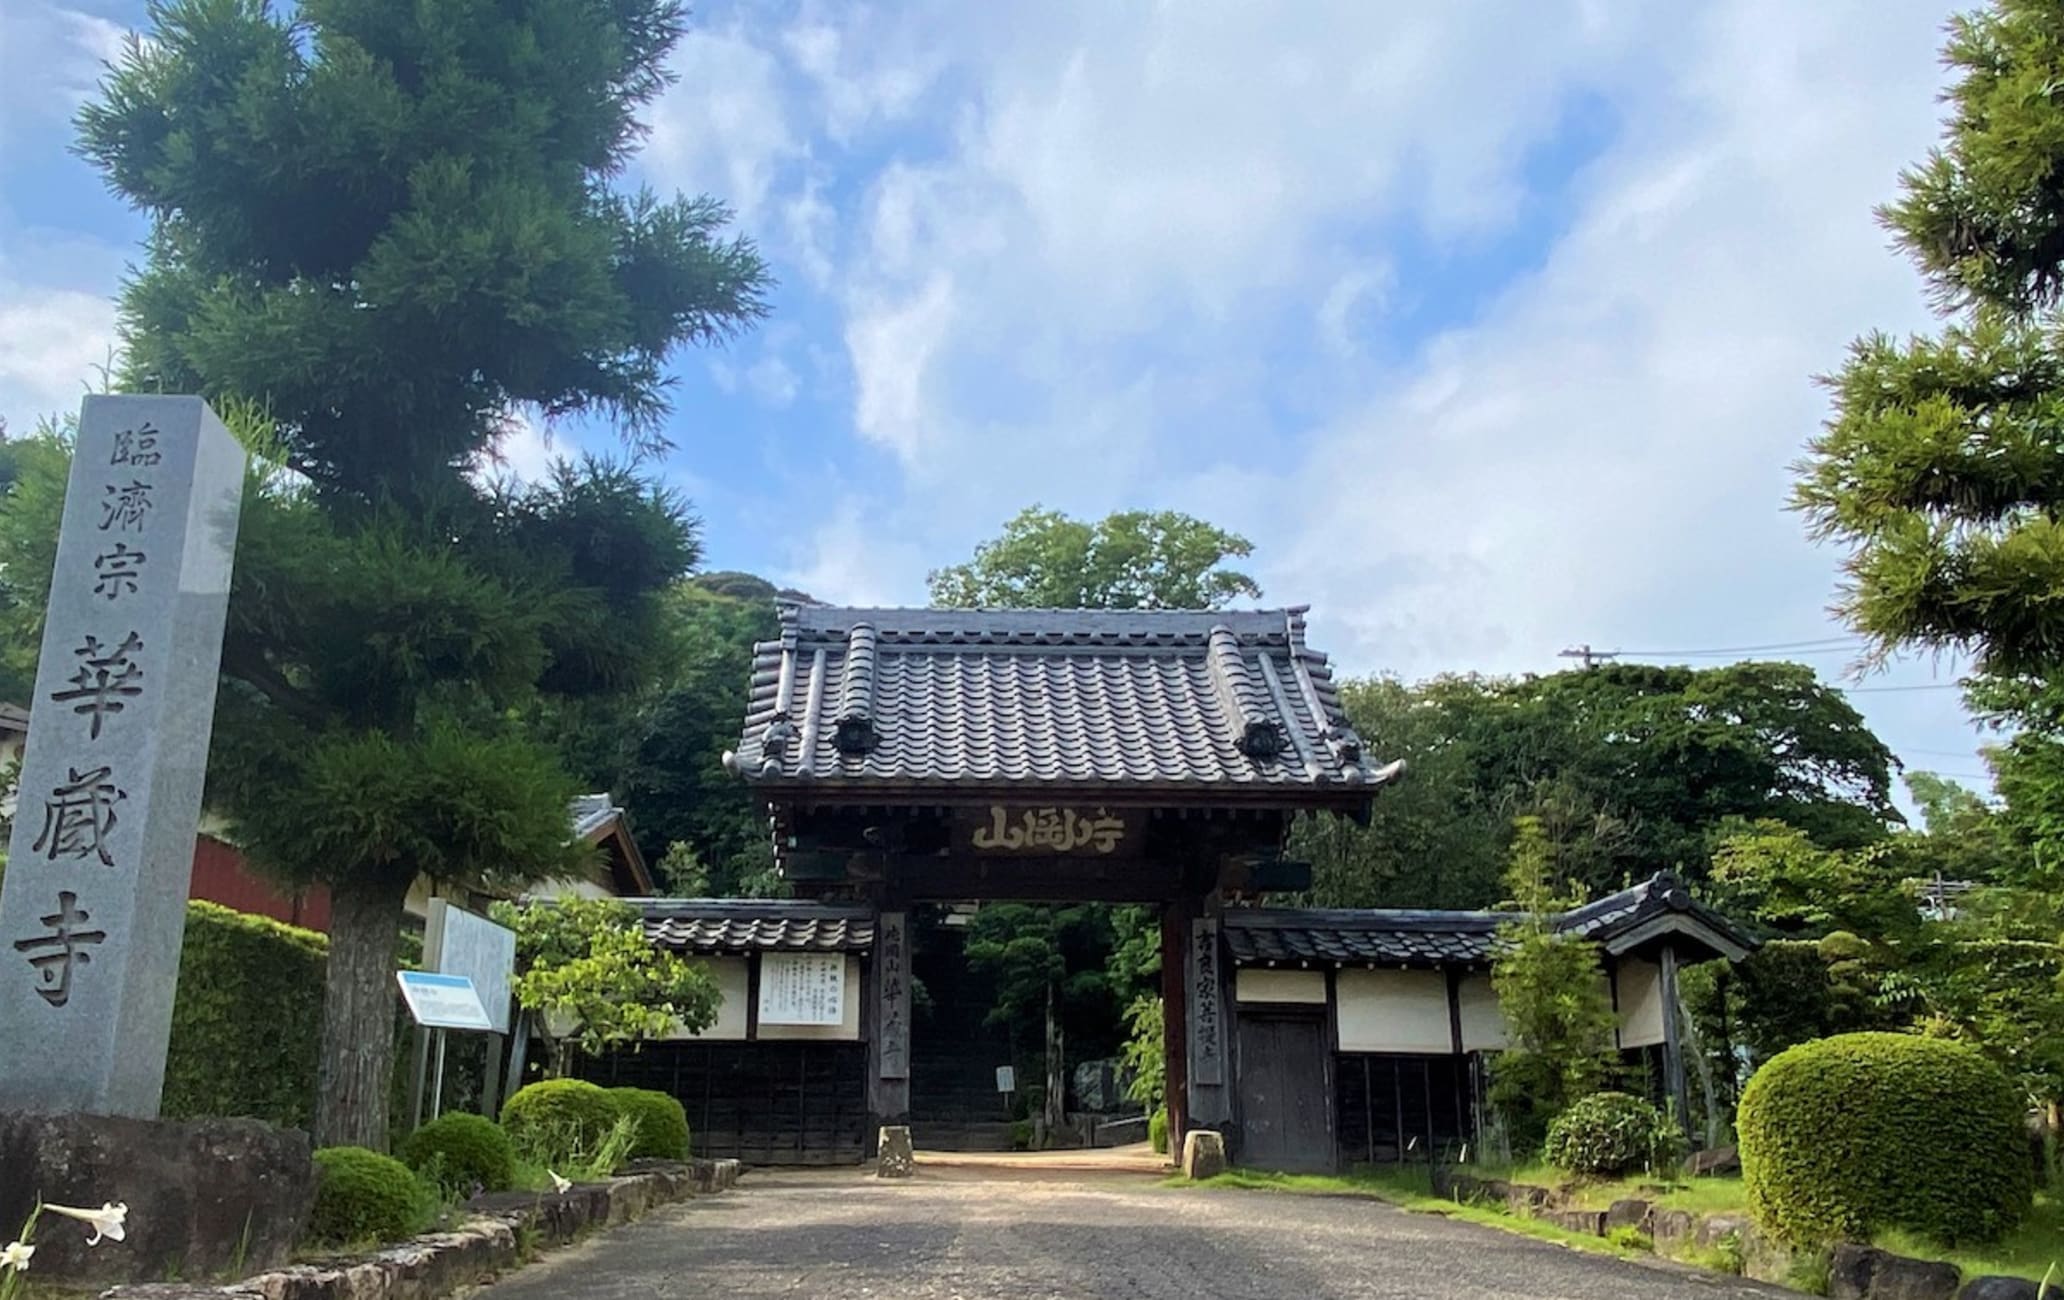 Kezoji Temple